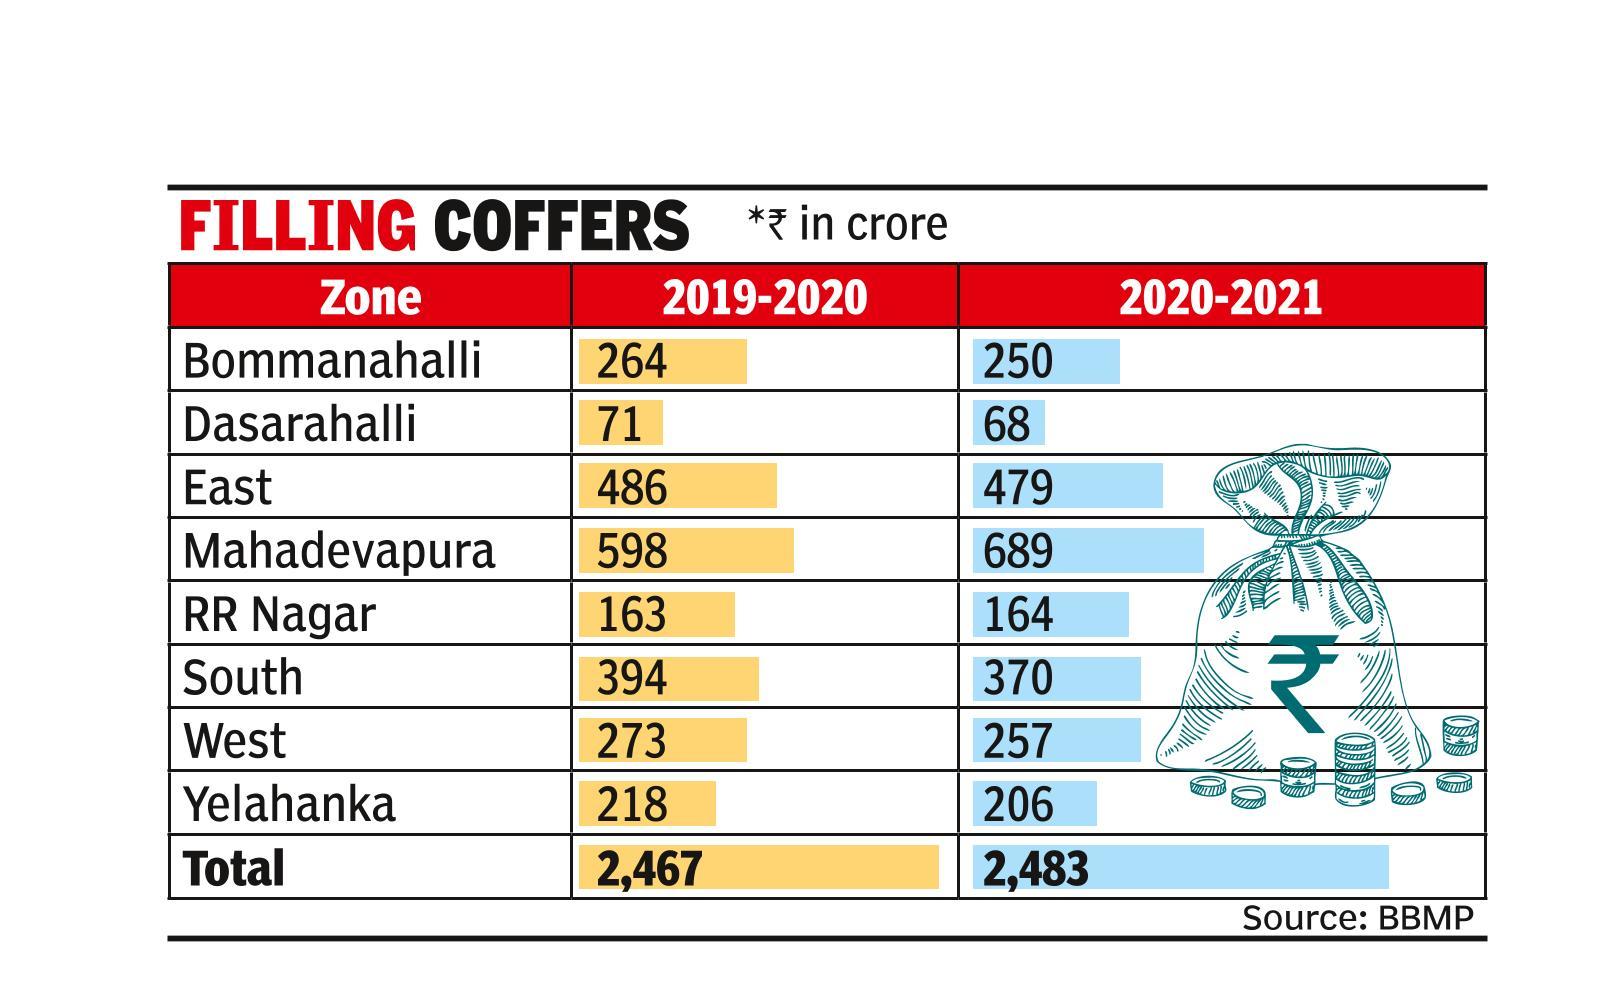 Bengaluru civic body nets Rs 16 crore more property tax than last year